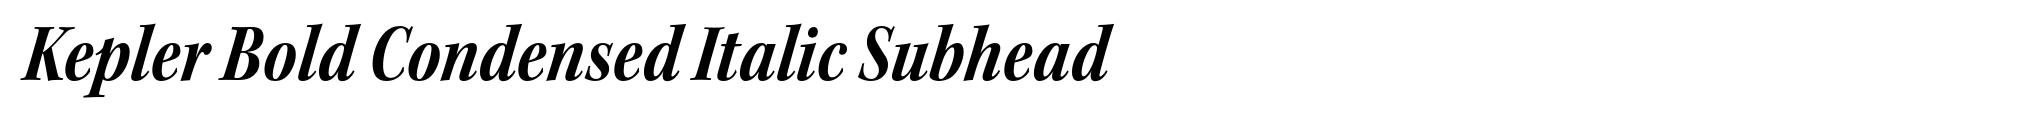 Kepler Bold Condensed Italic Subhead image